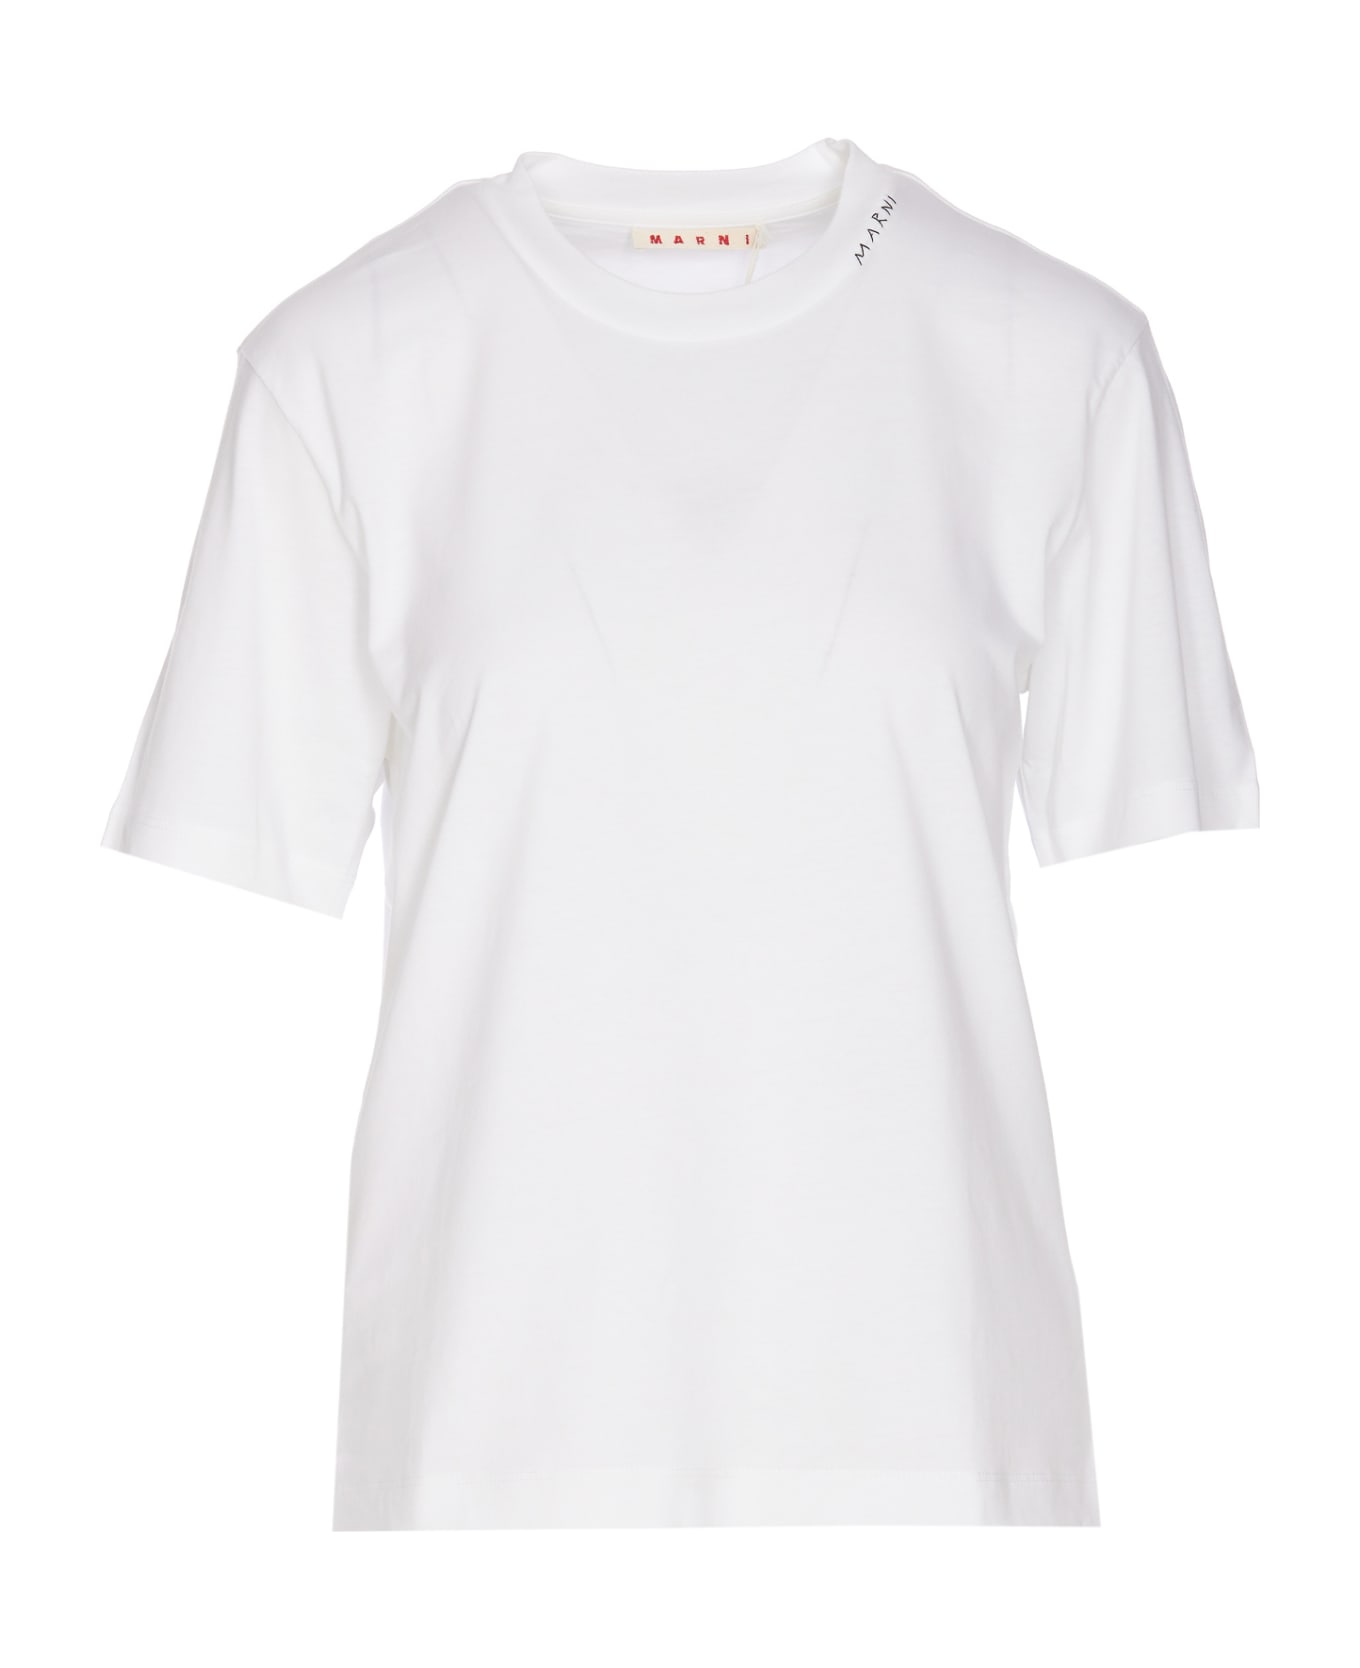 Marni 3 Pack Logo T-shirt - White